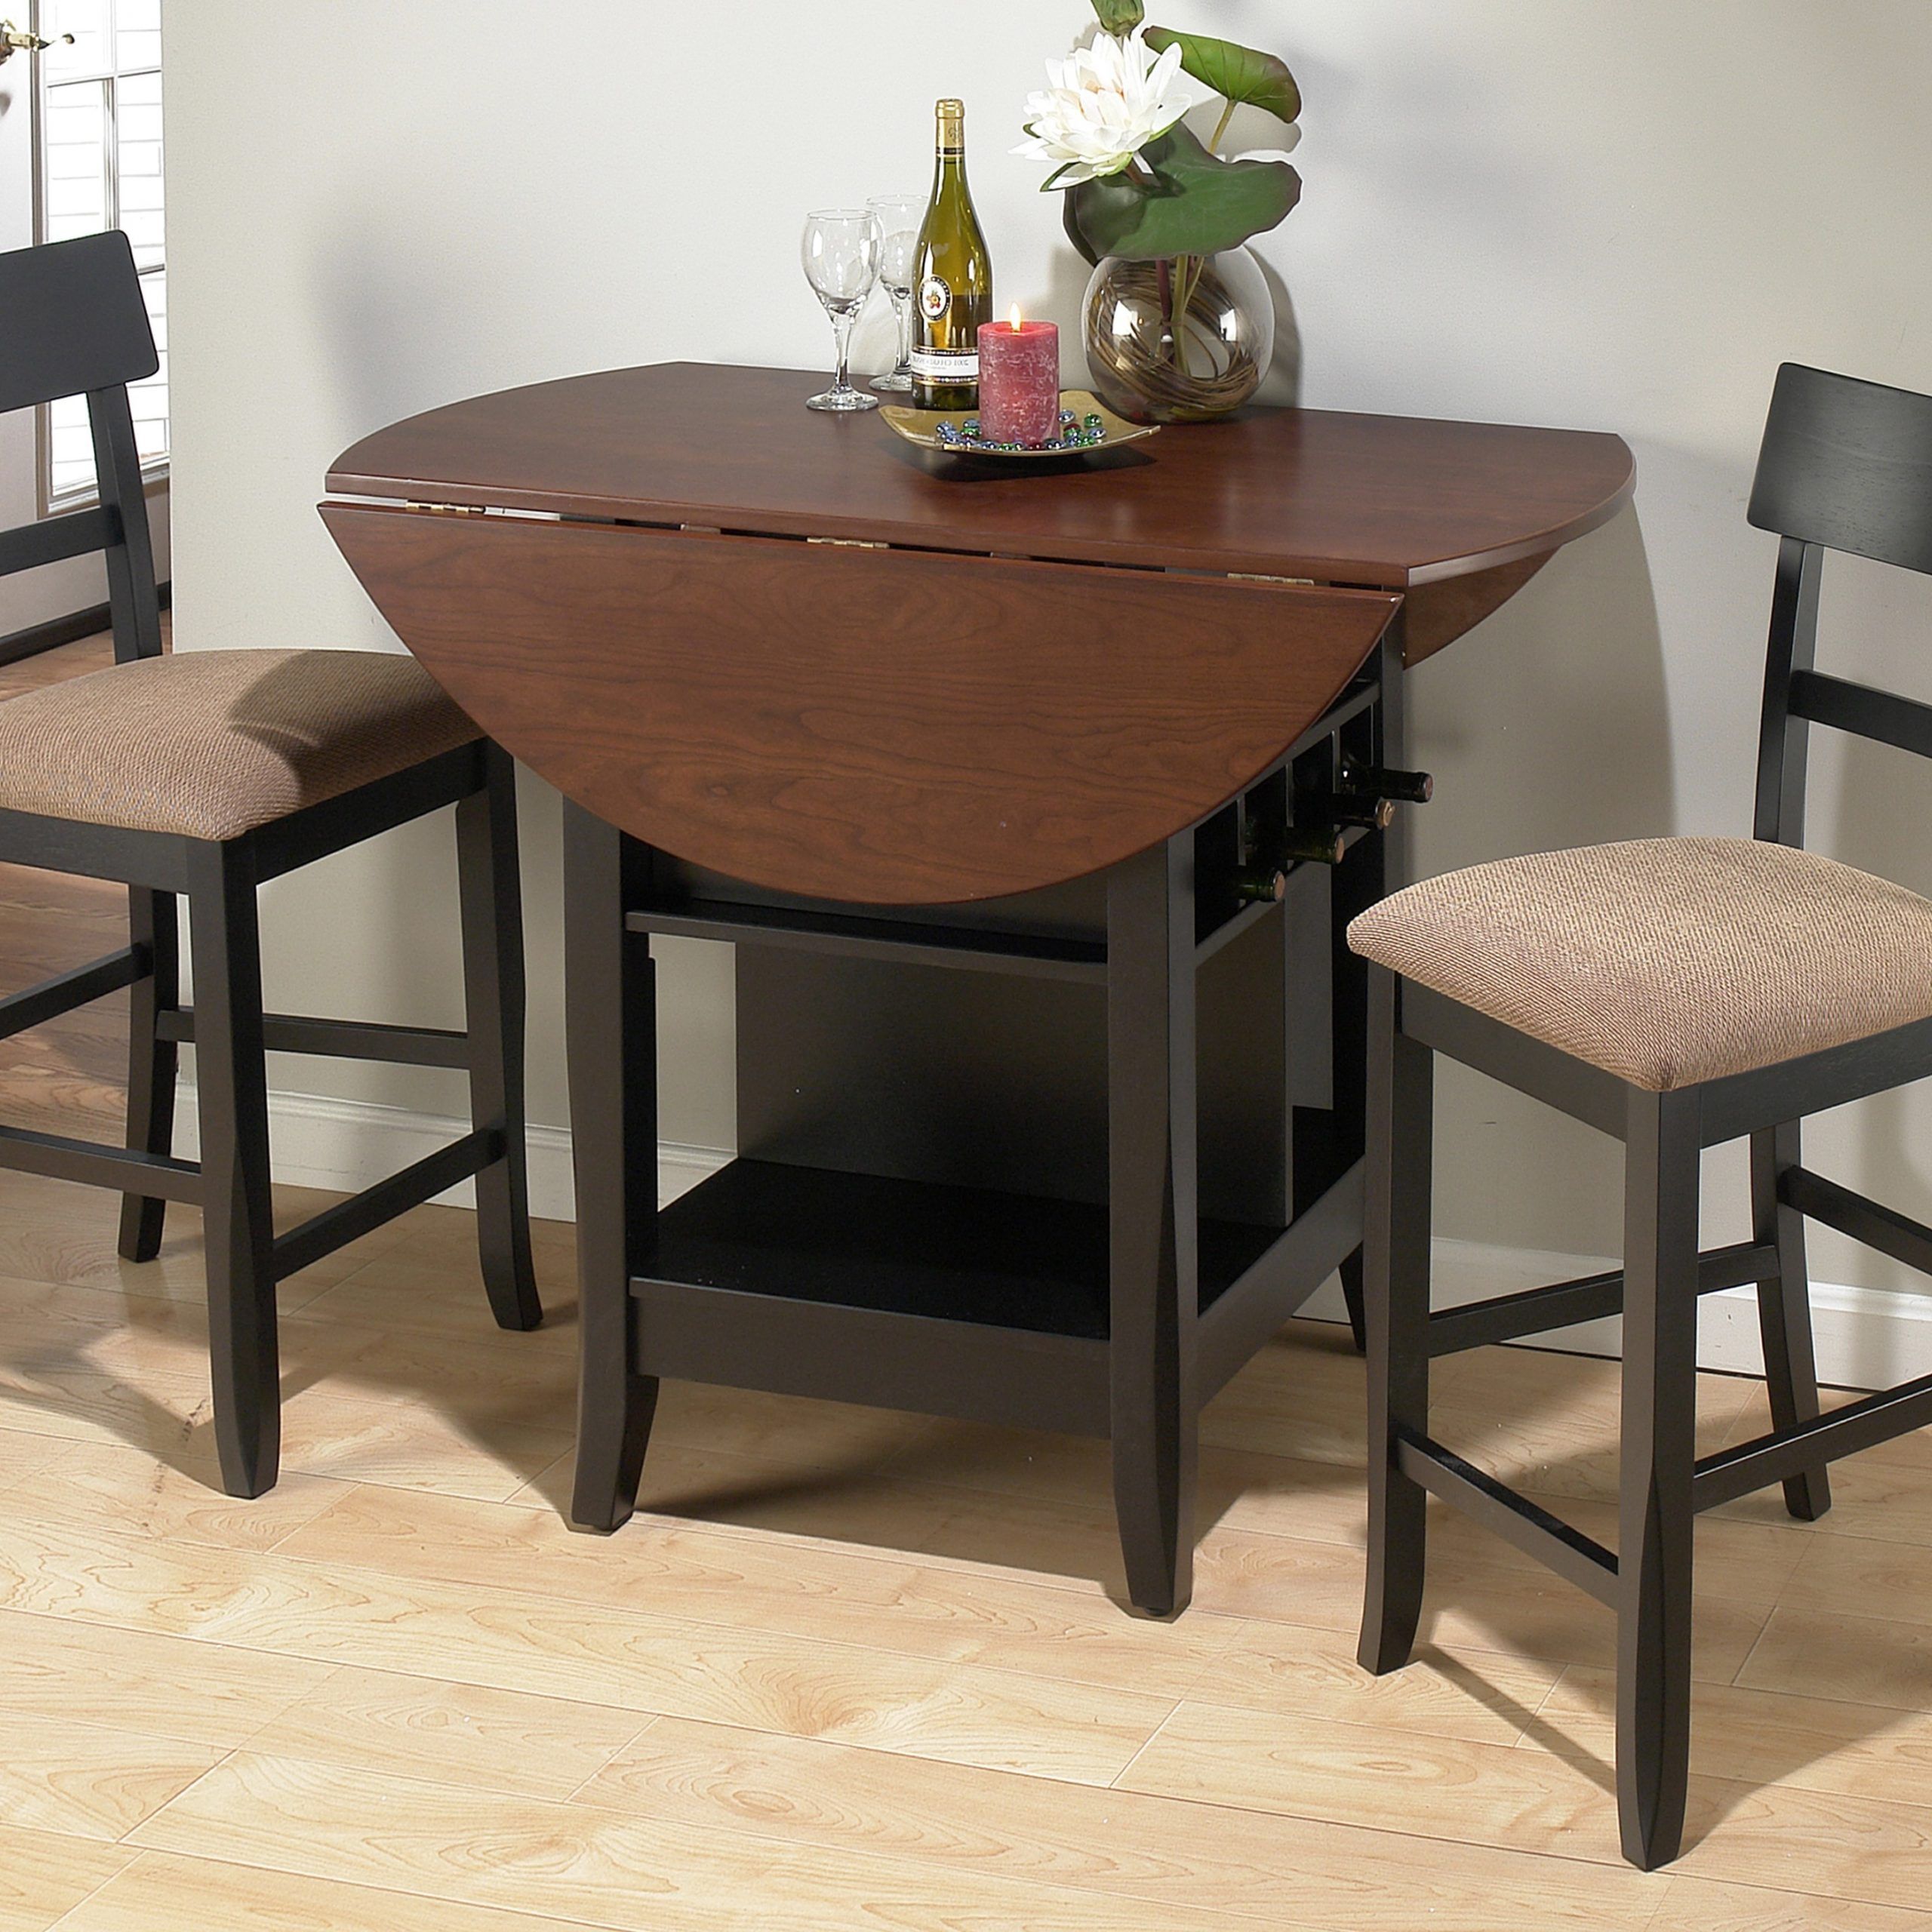 Medium Elegant Dining Tables With Favorite Dinning Furniture : Table With Leaf Dining Table With (View 24 of 25)